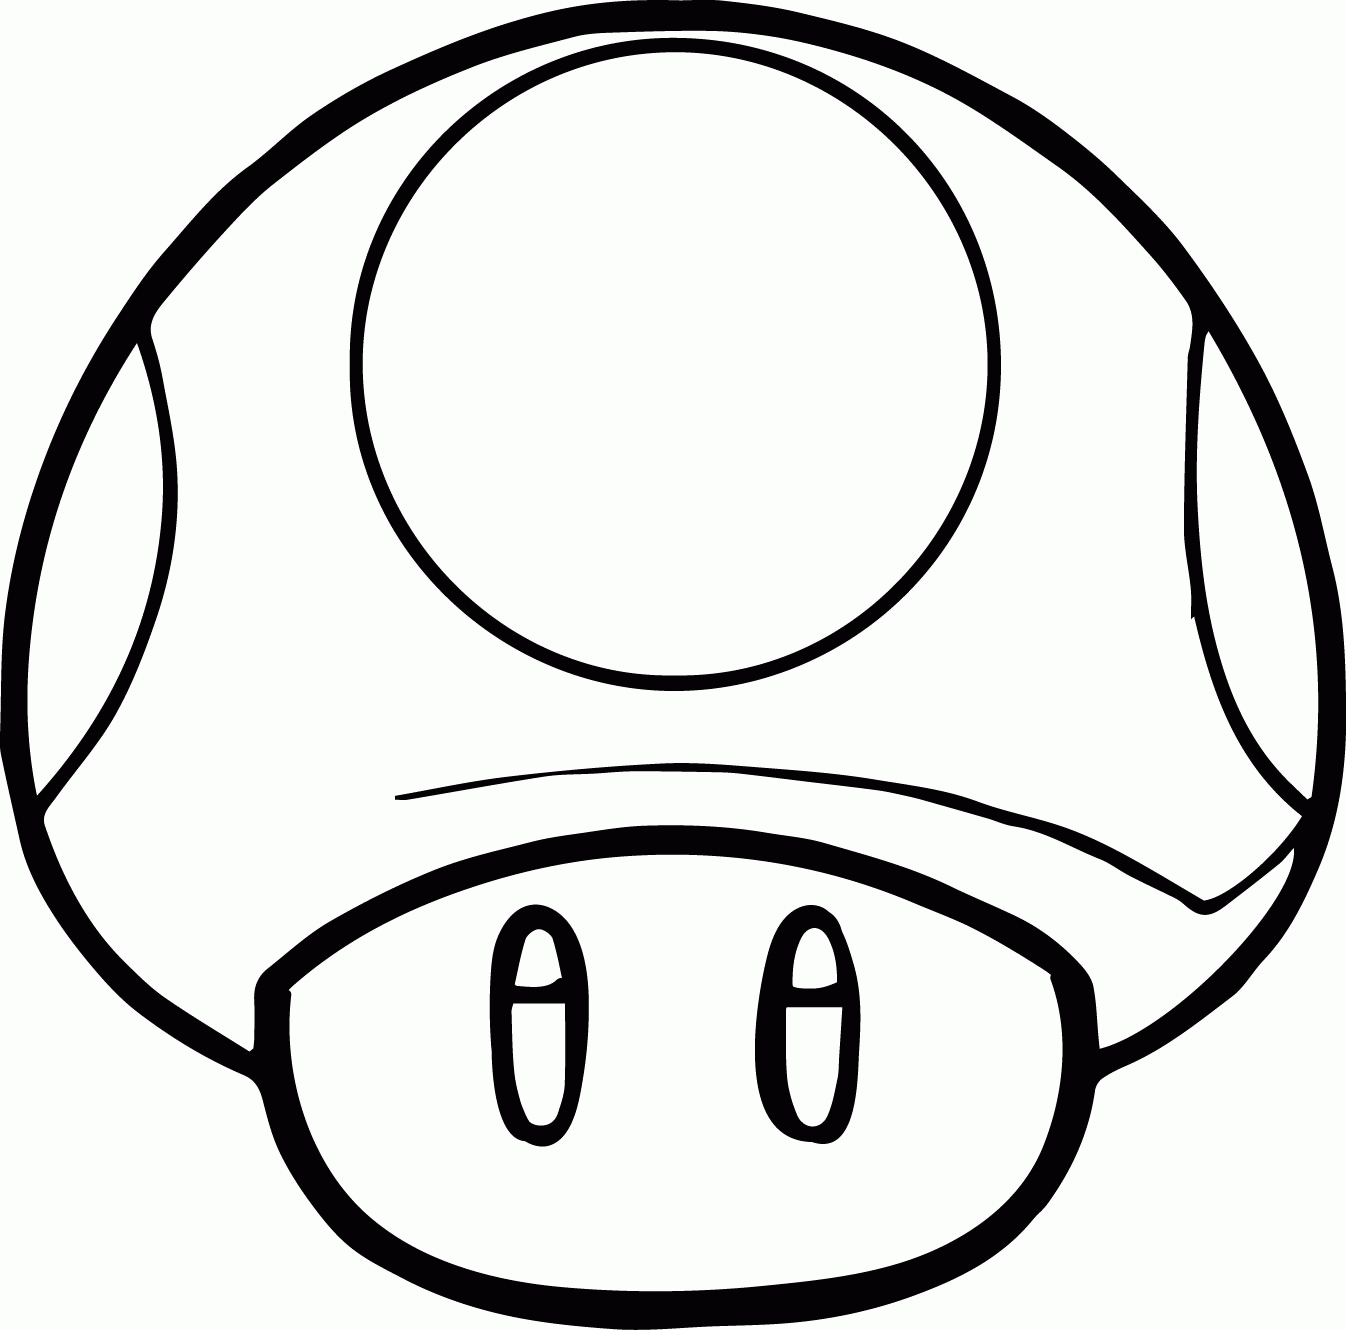 Mario Toad Drawing at GetDrawings | Free download